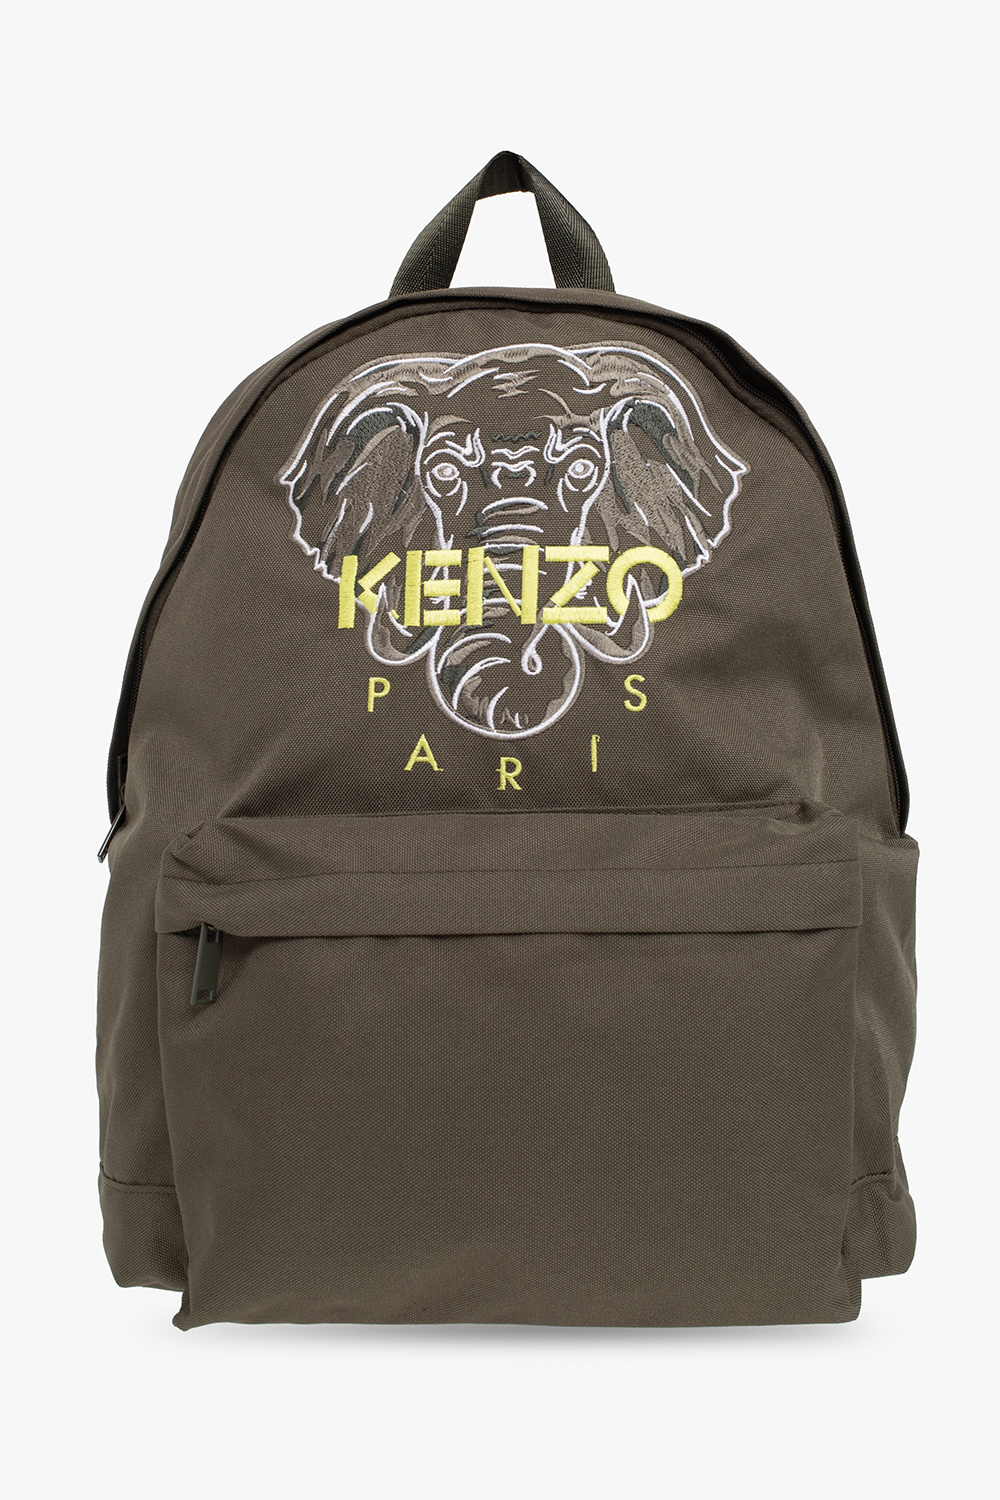 Kenzo Kids tote bag burberry bag black